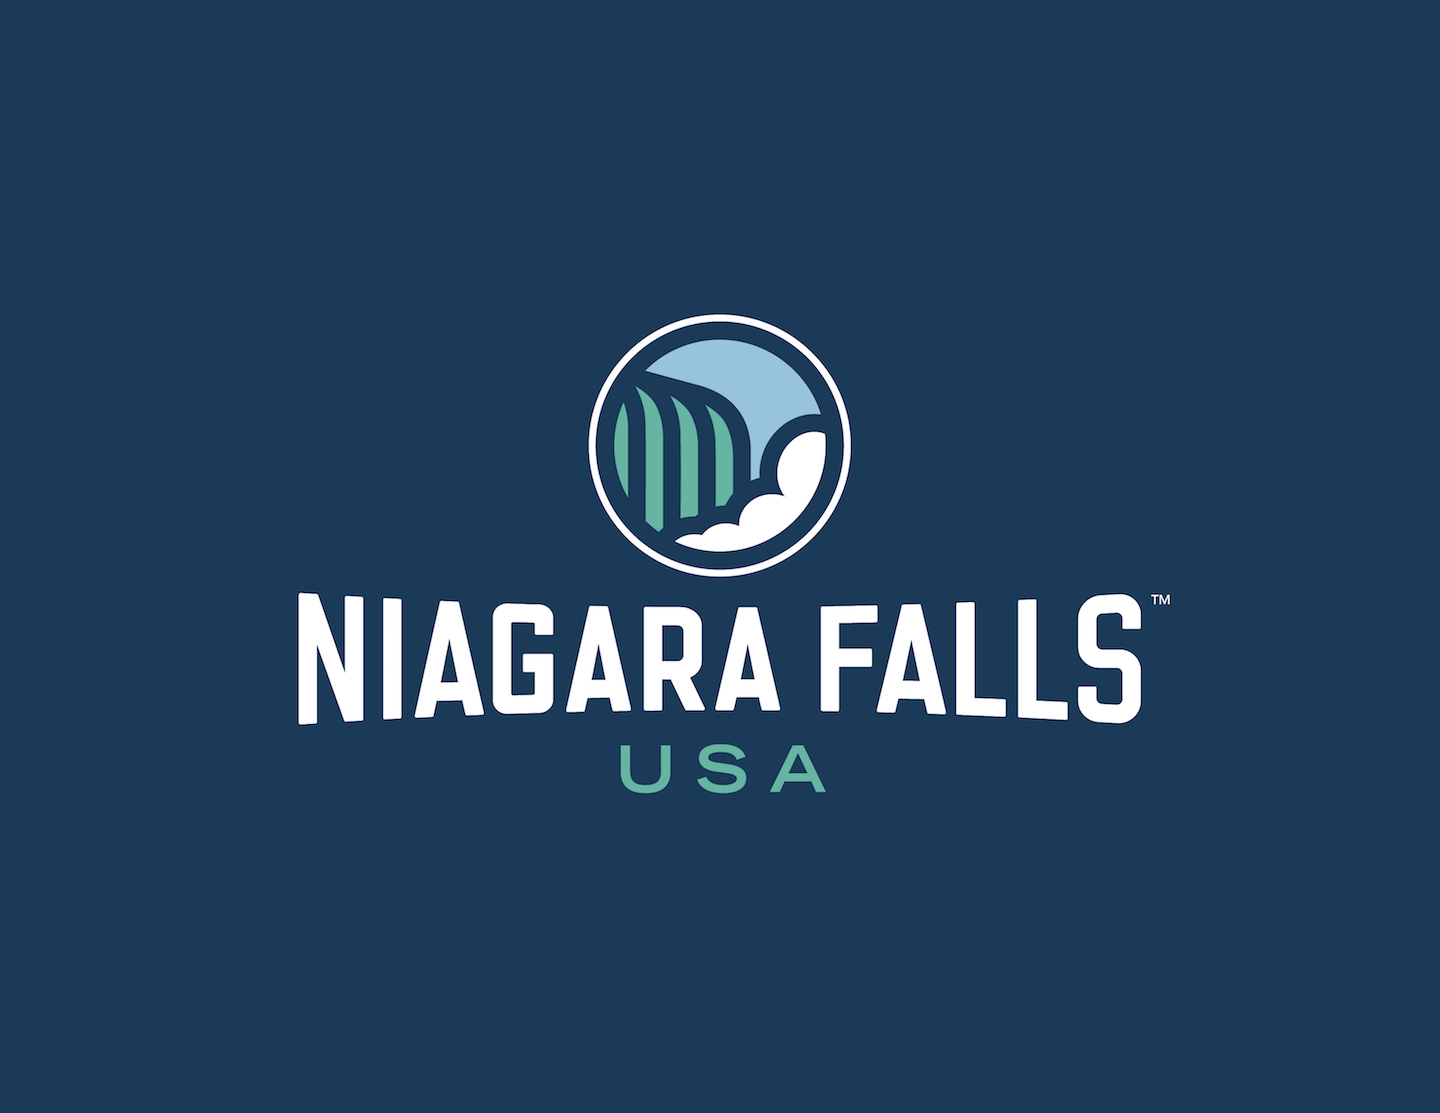 Logo courtesy of Destination Niagara USA